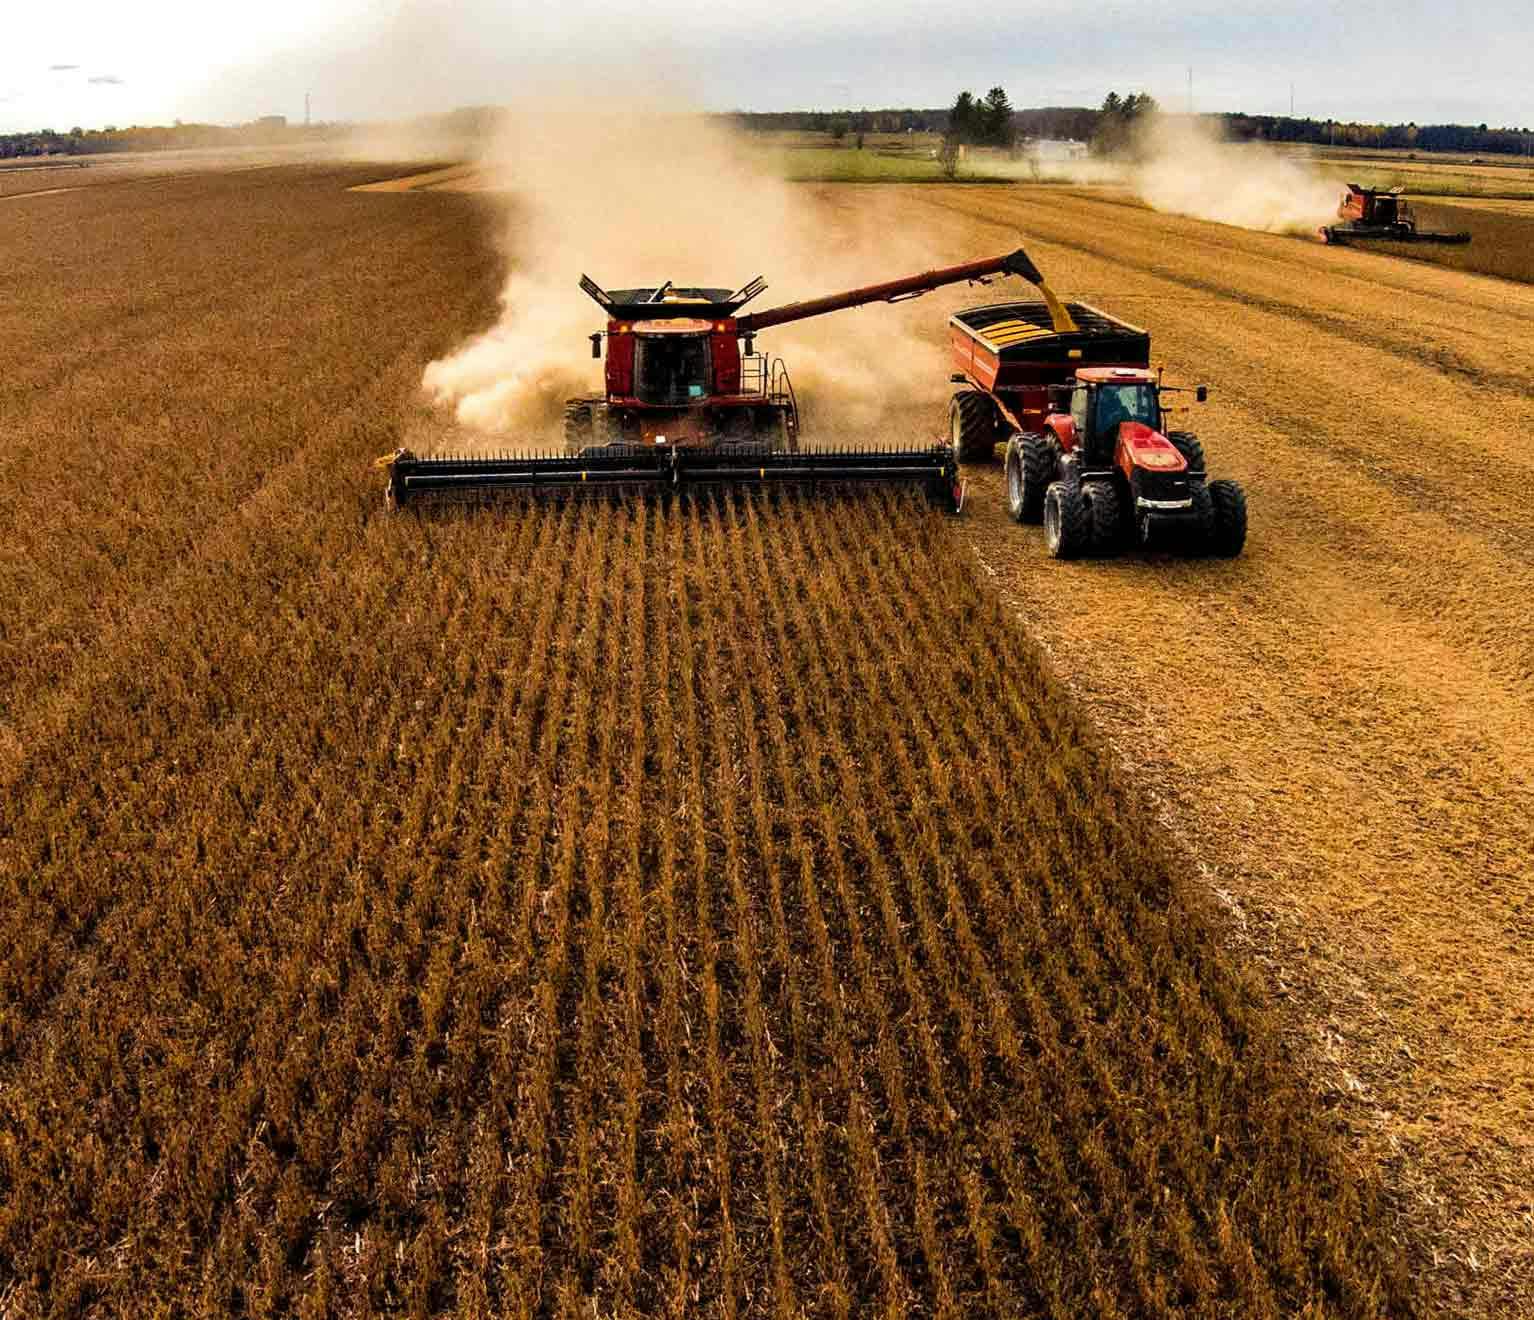 Image of a combine harvesting corn.